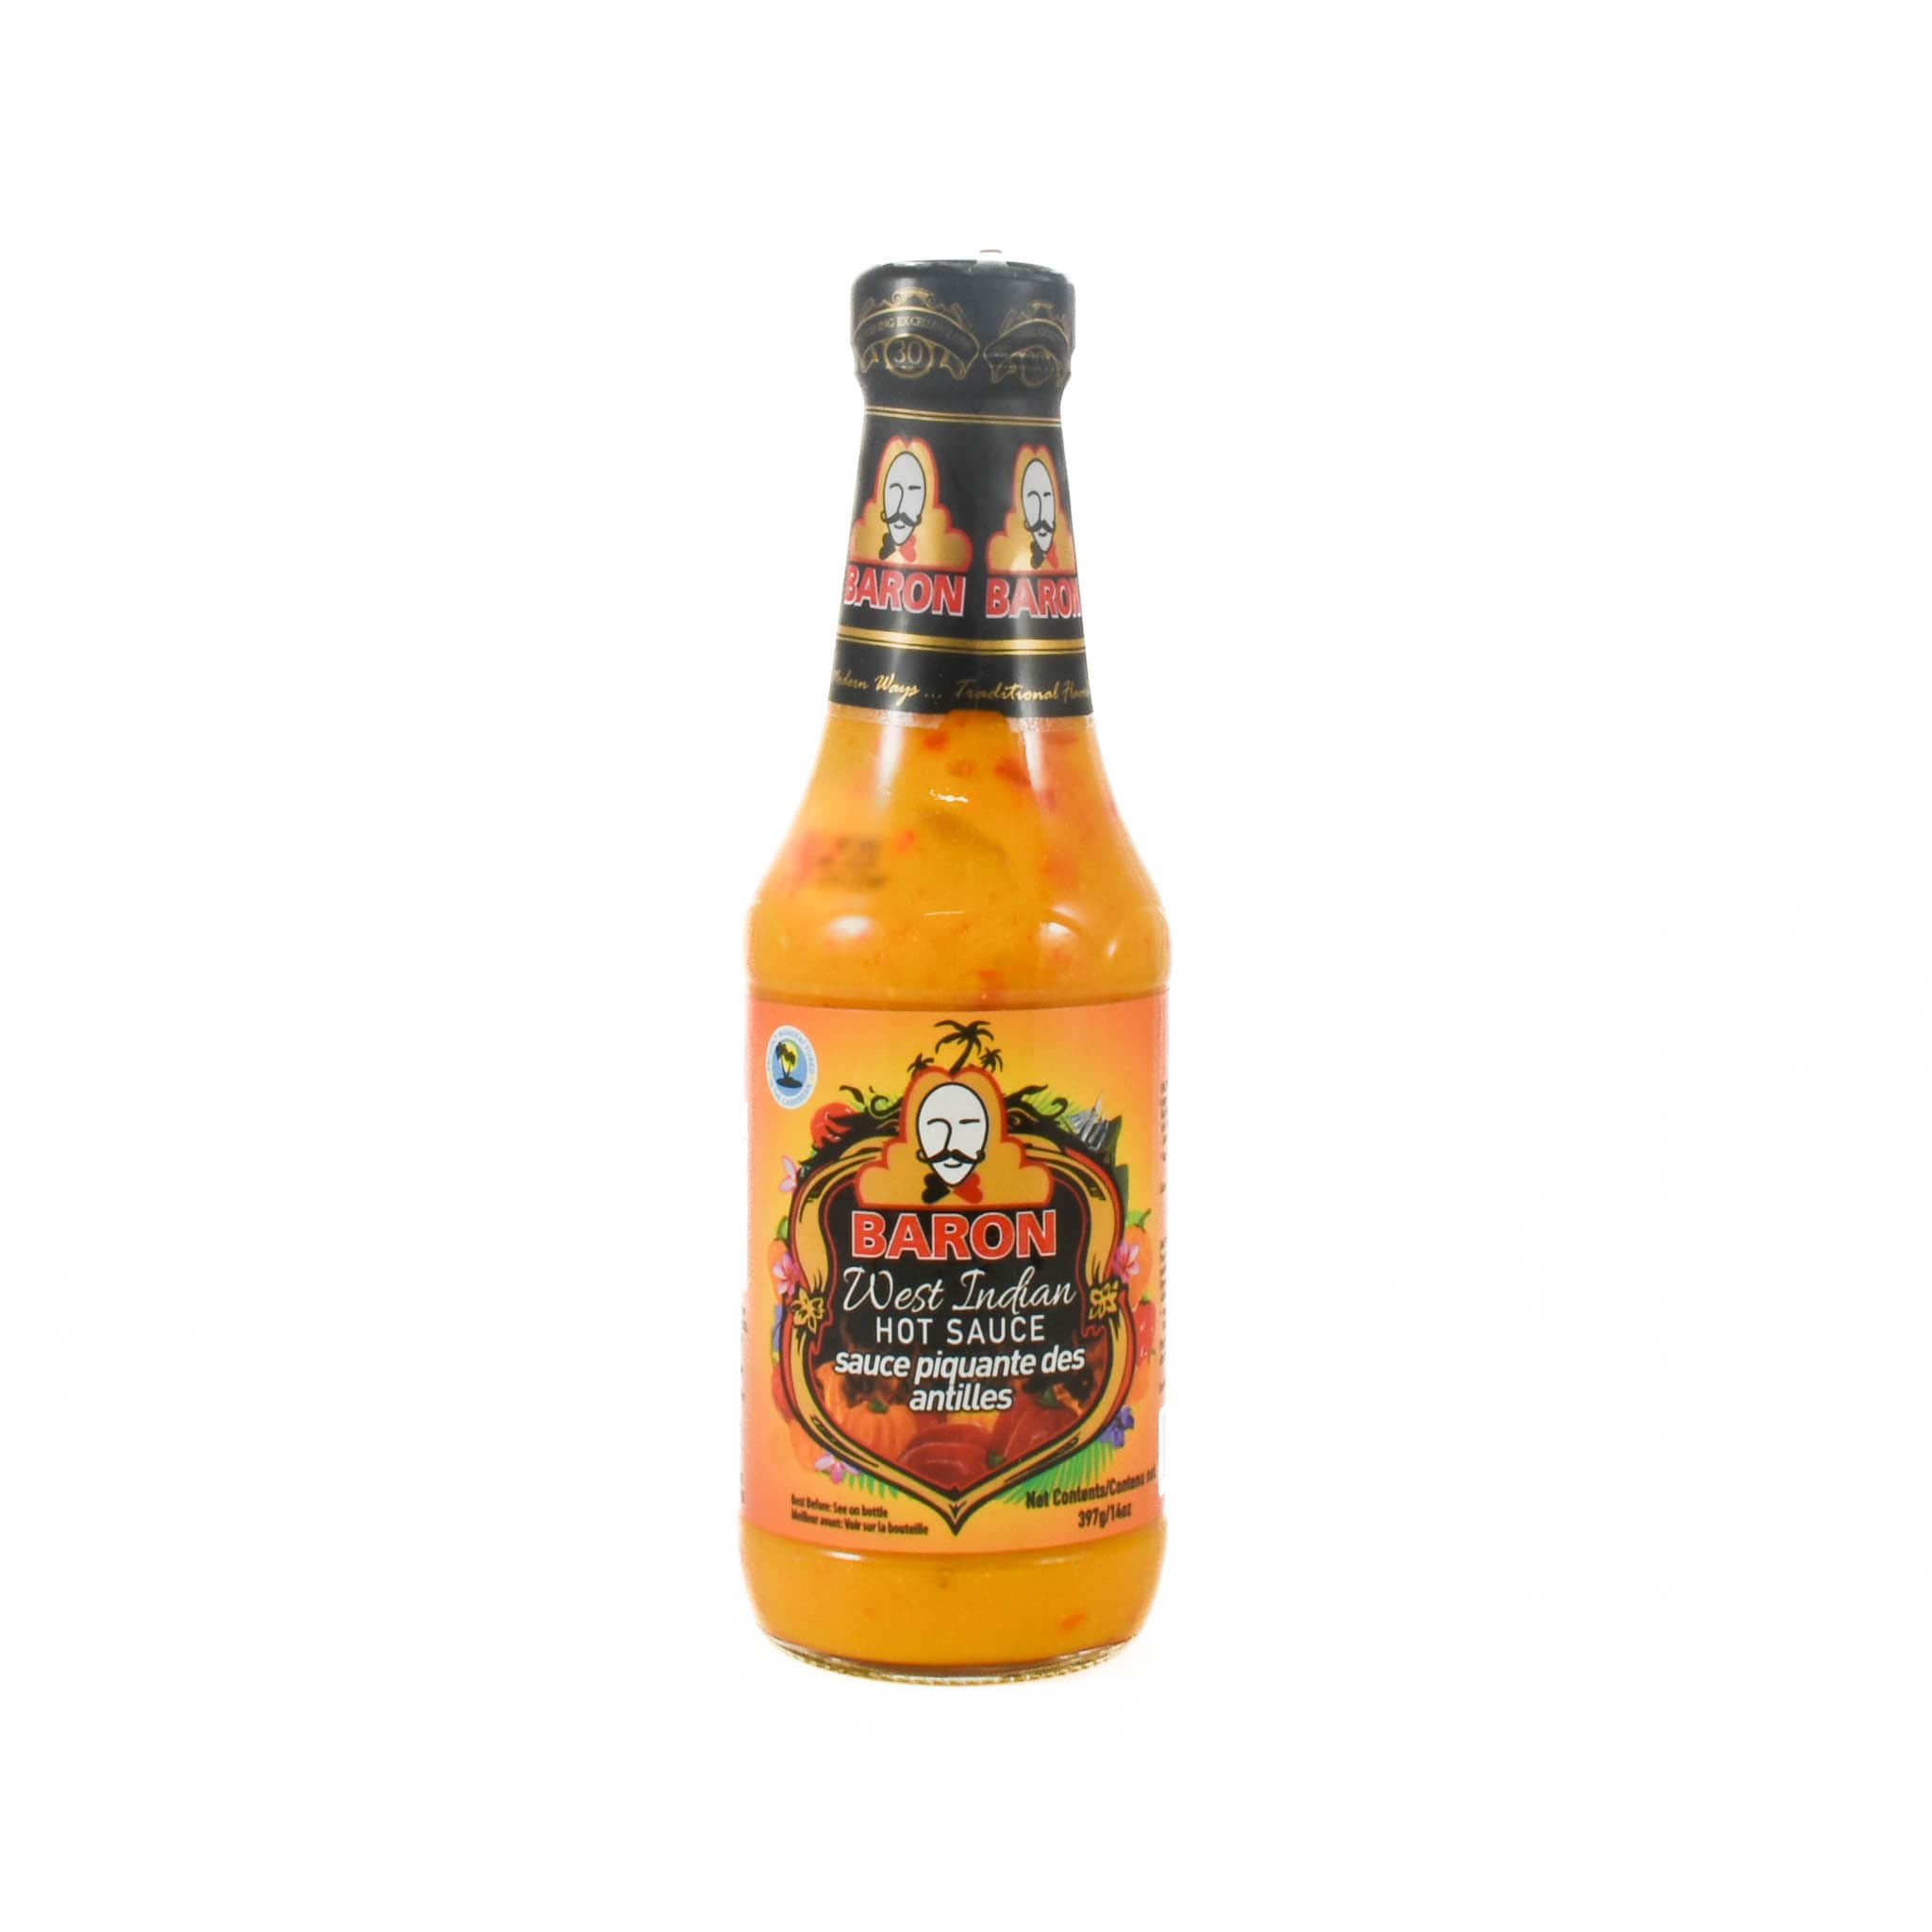 Baron West Indian Hot Sauce, 397g